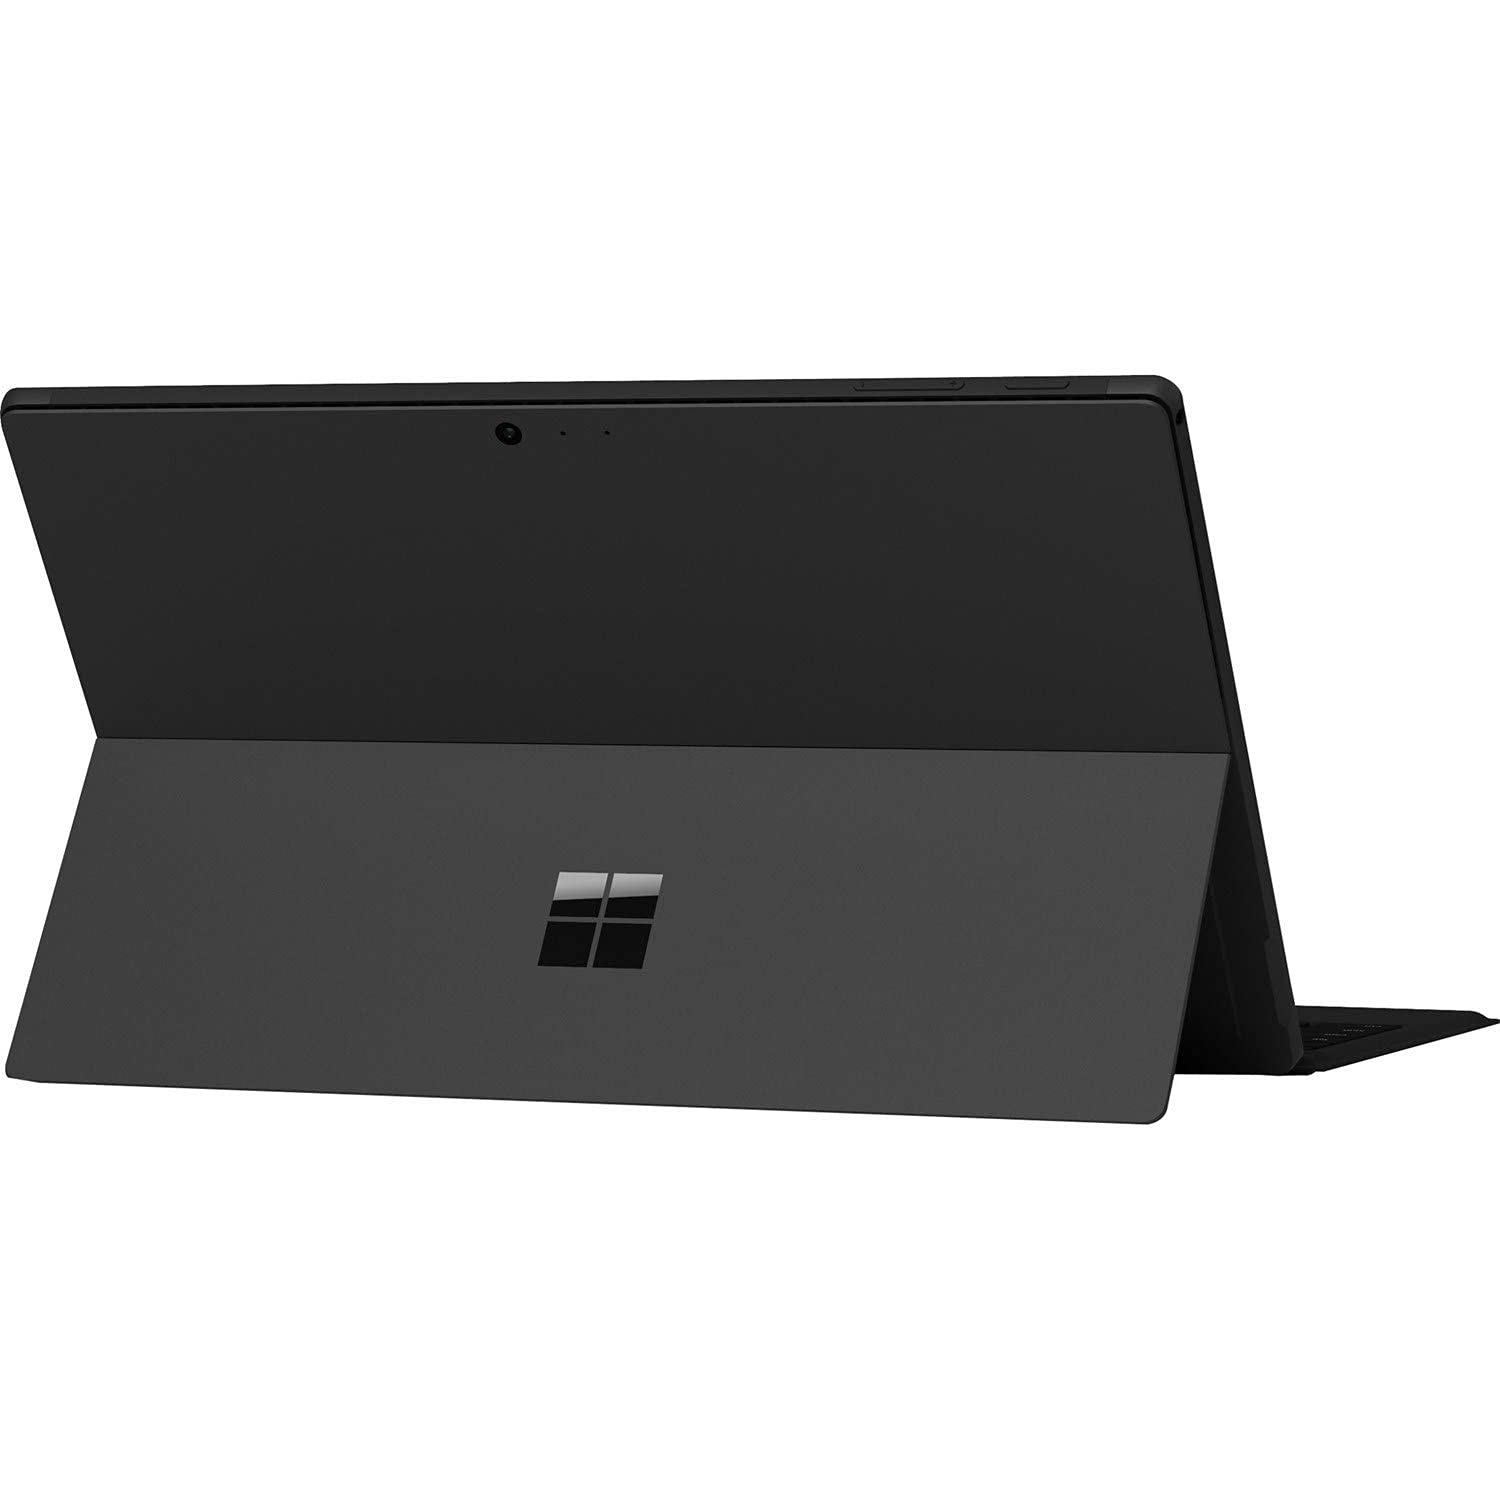 Microsoft Surface Pro 6 LQ6-00016 12.3" 256GB WiFi Intel Core i5-8250U X4 1.6GHz, Black (Renewed)